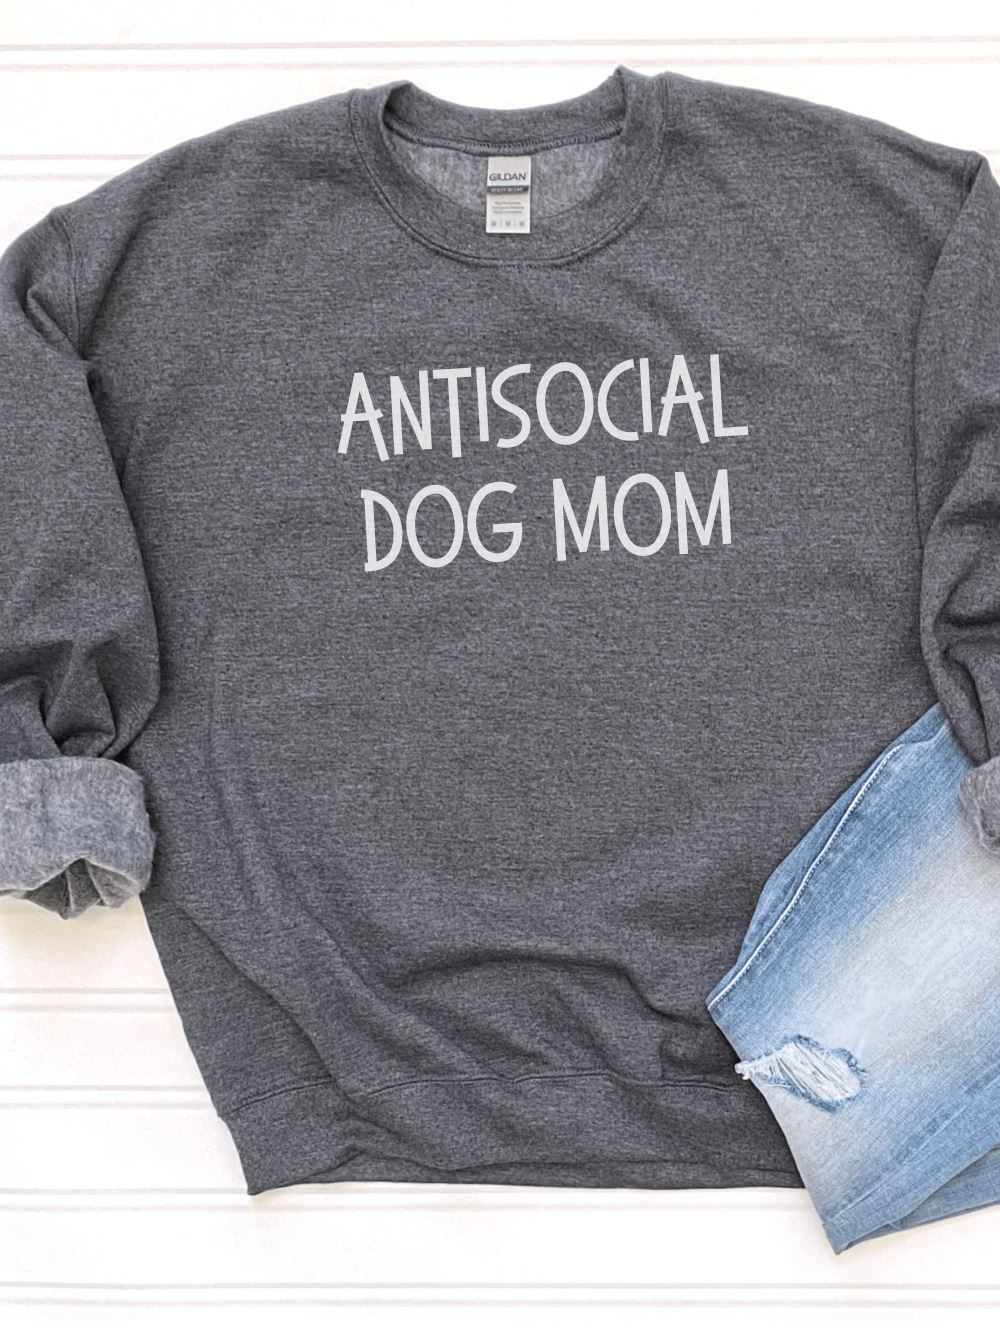 Dog Life Graphic T-Shirts, Sweatshirts, & More